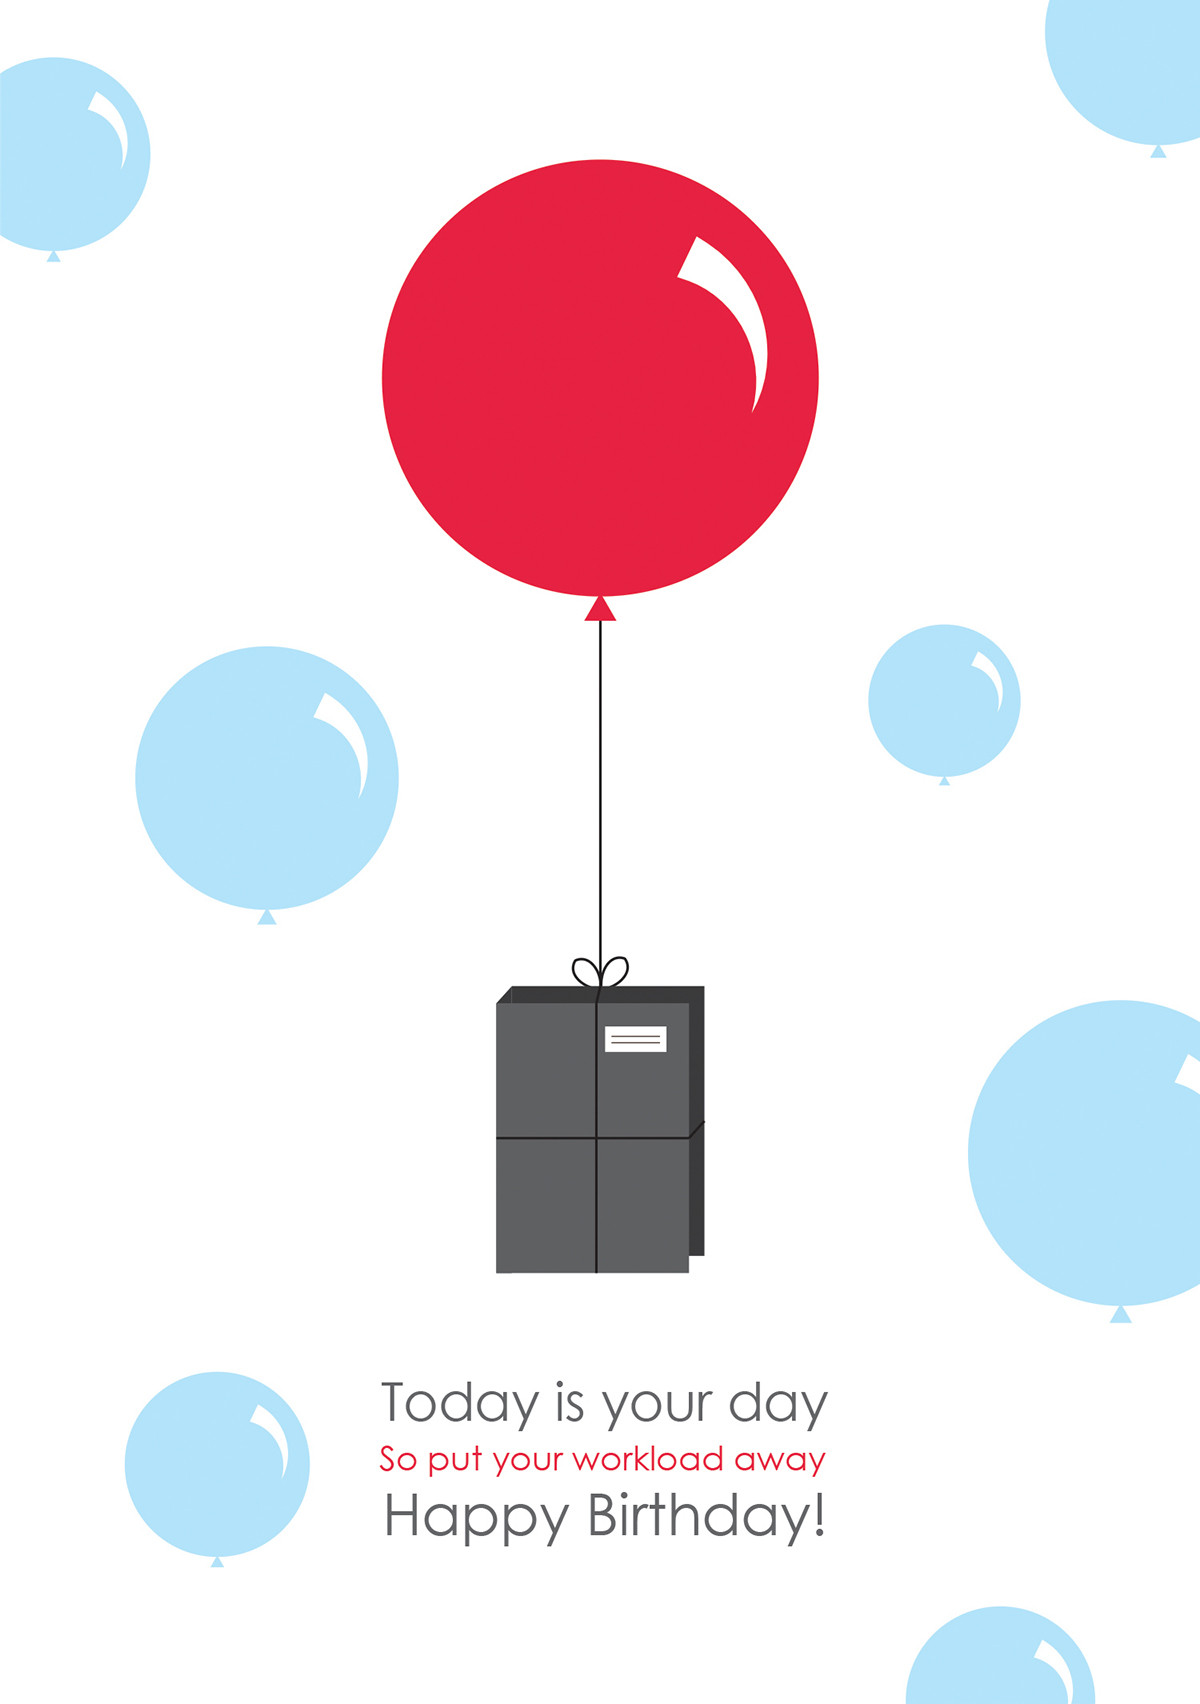 Best ideas about Minimalist Birthday Card
. Save or Pin Minimalist Birthday Cards Volume 2 on Behance Now.